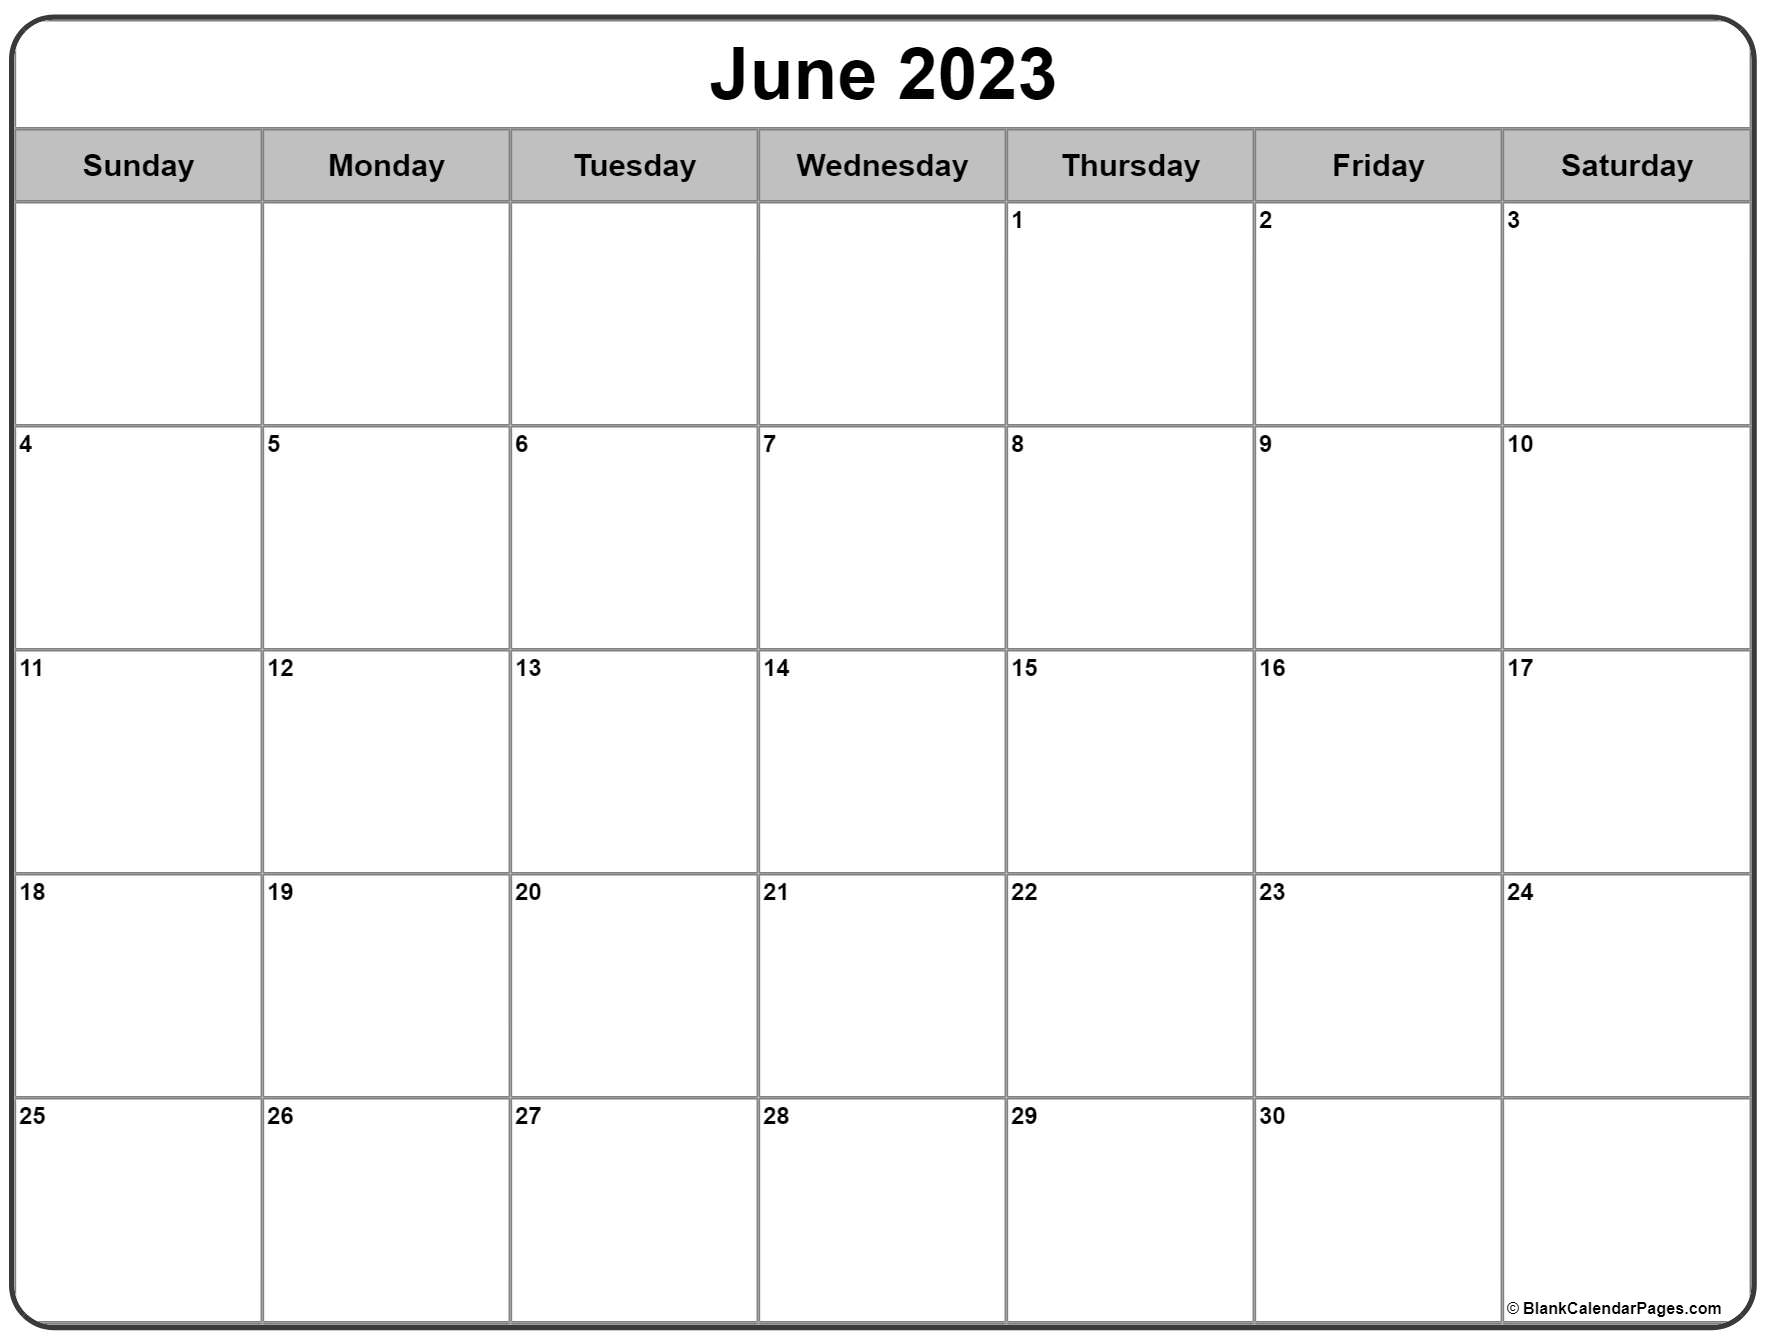 june-2023-calendar-free-printable-calendar-dailycalendars